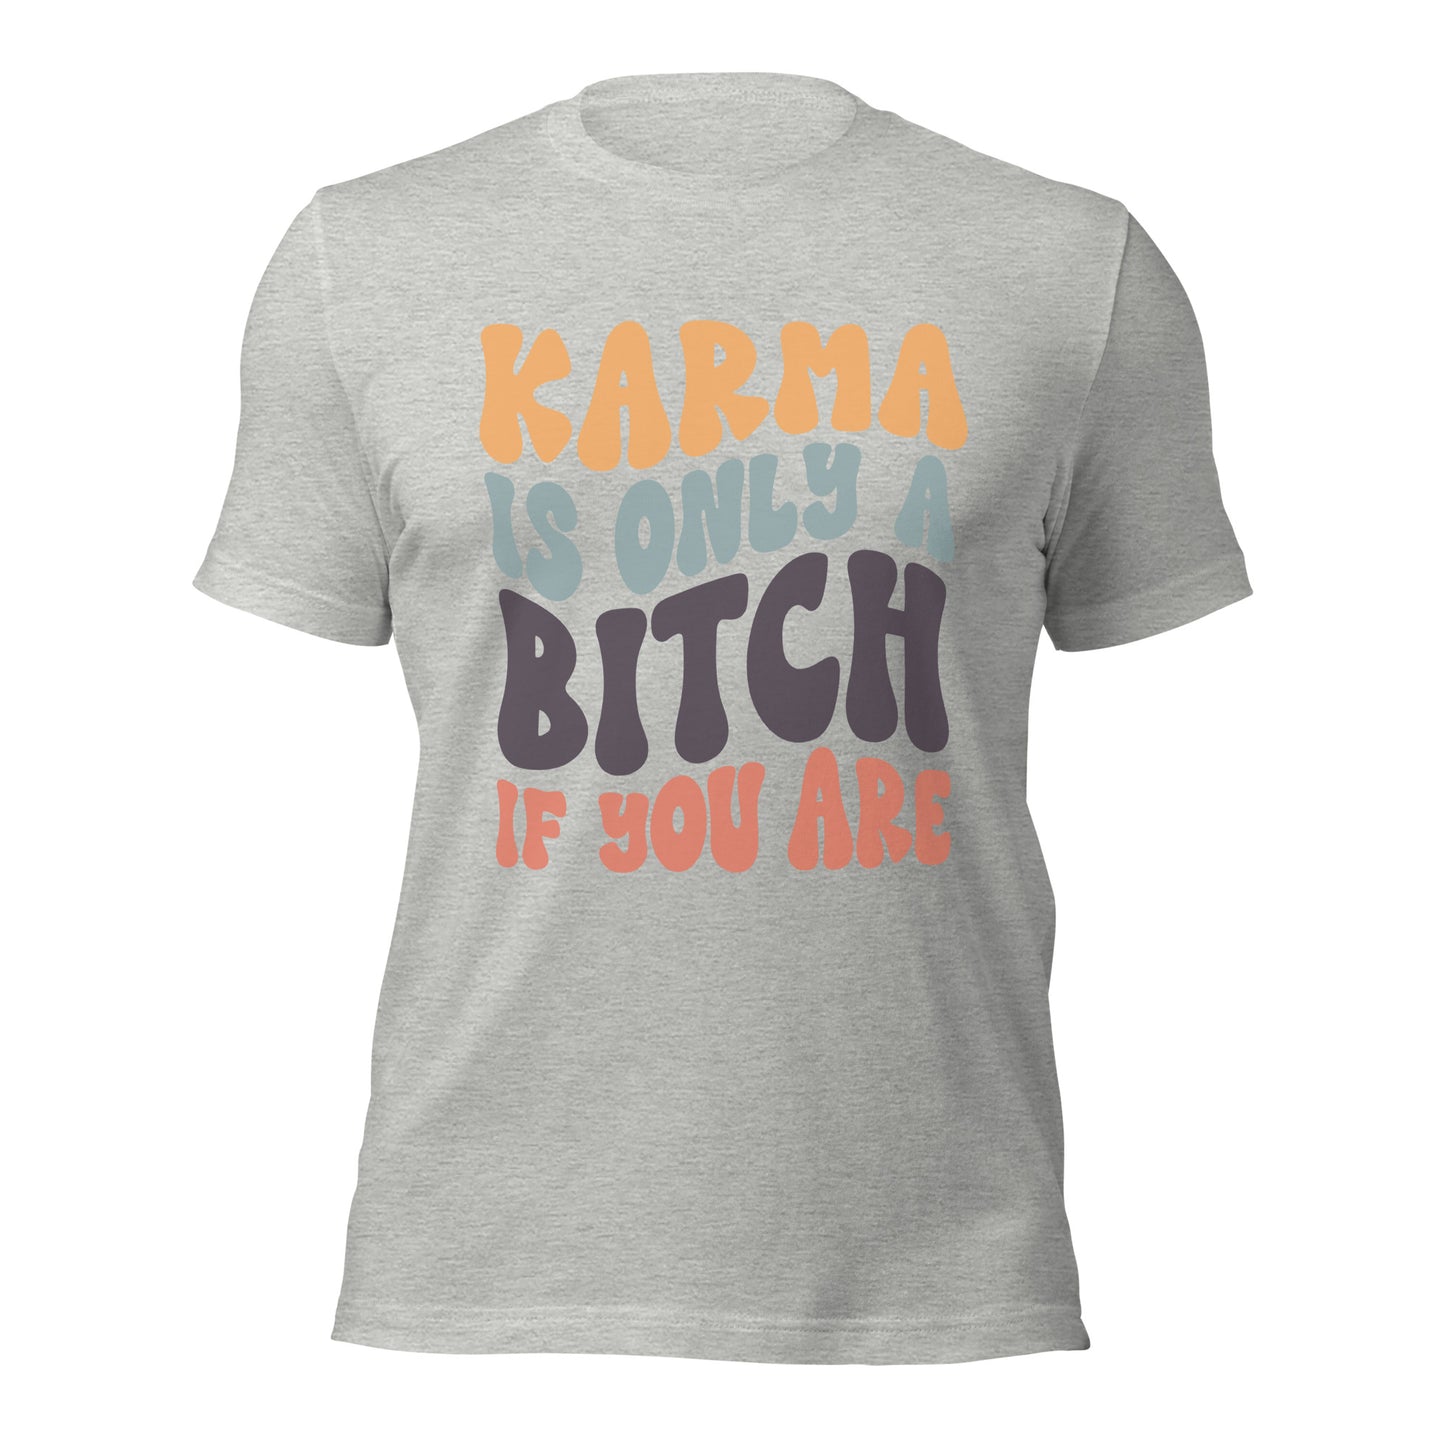 Karma's a bitch t-shirt